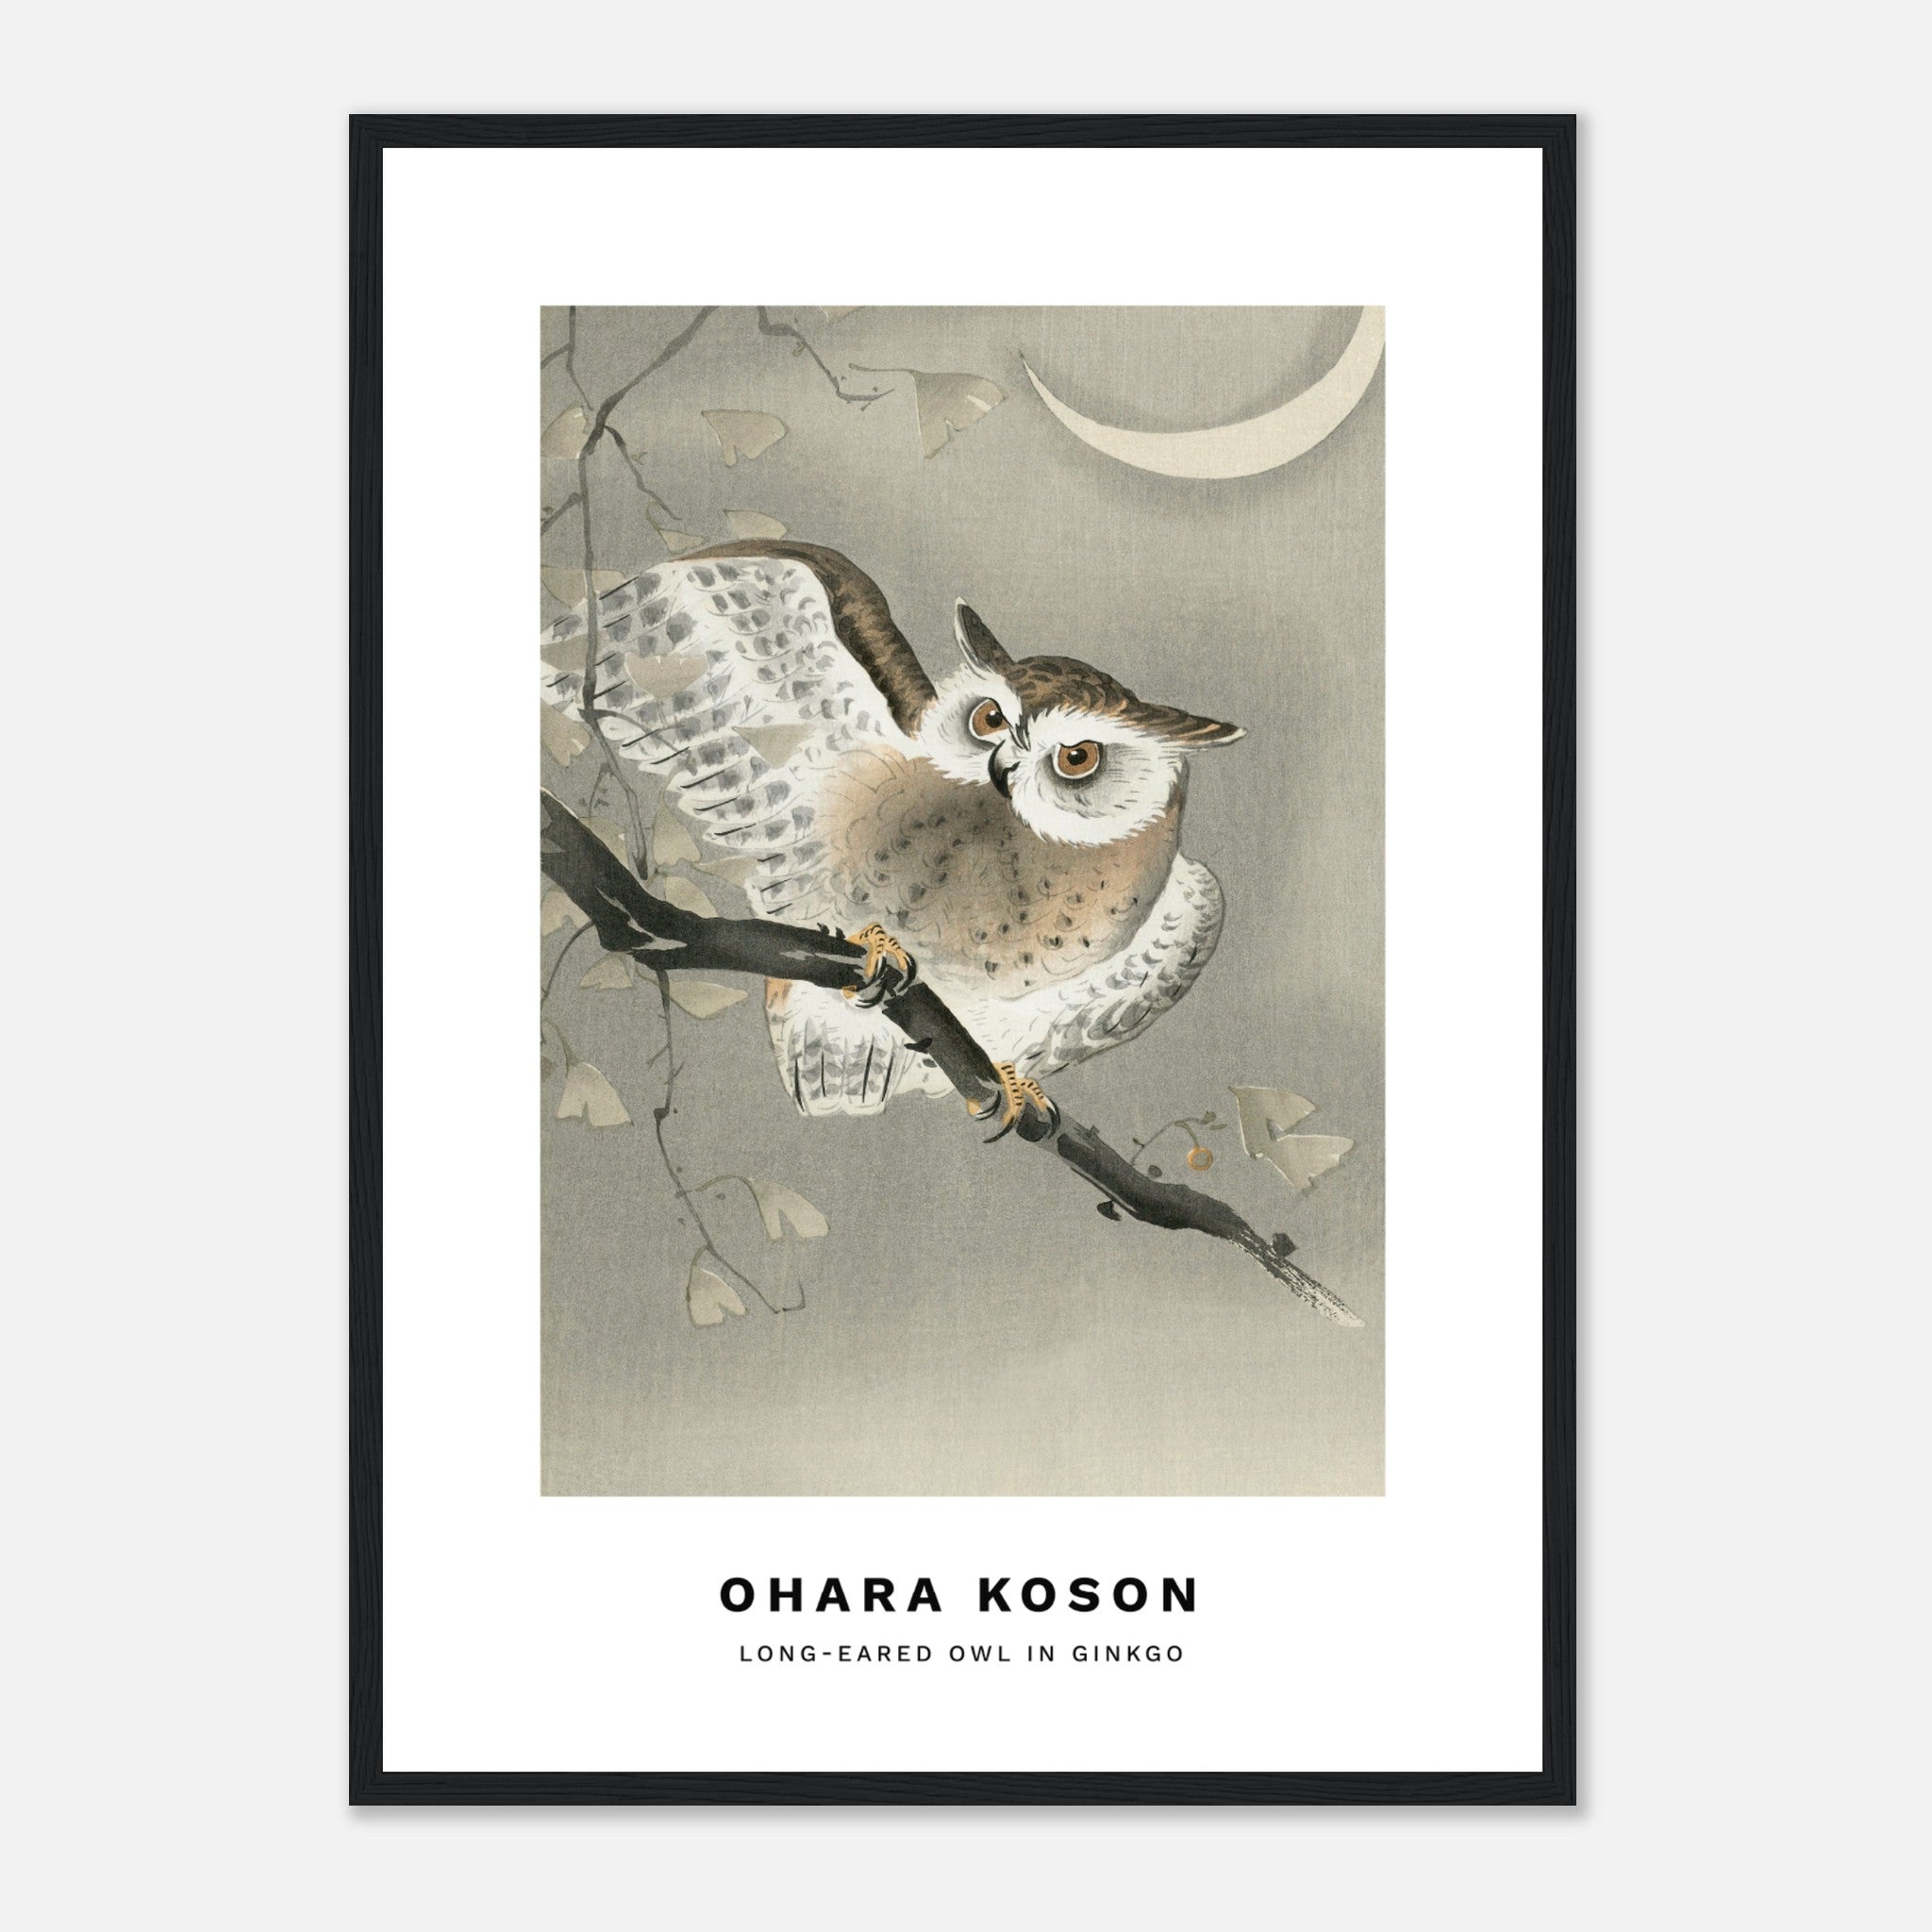 Long-eared owl in ginkgo by Ohara Koson Poster